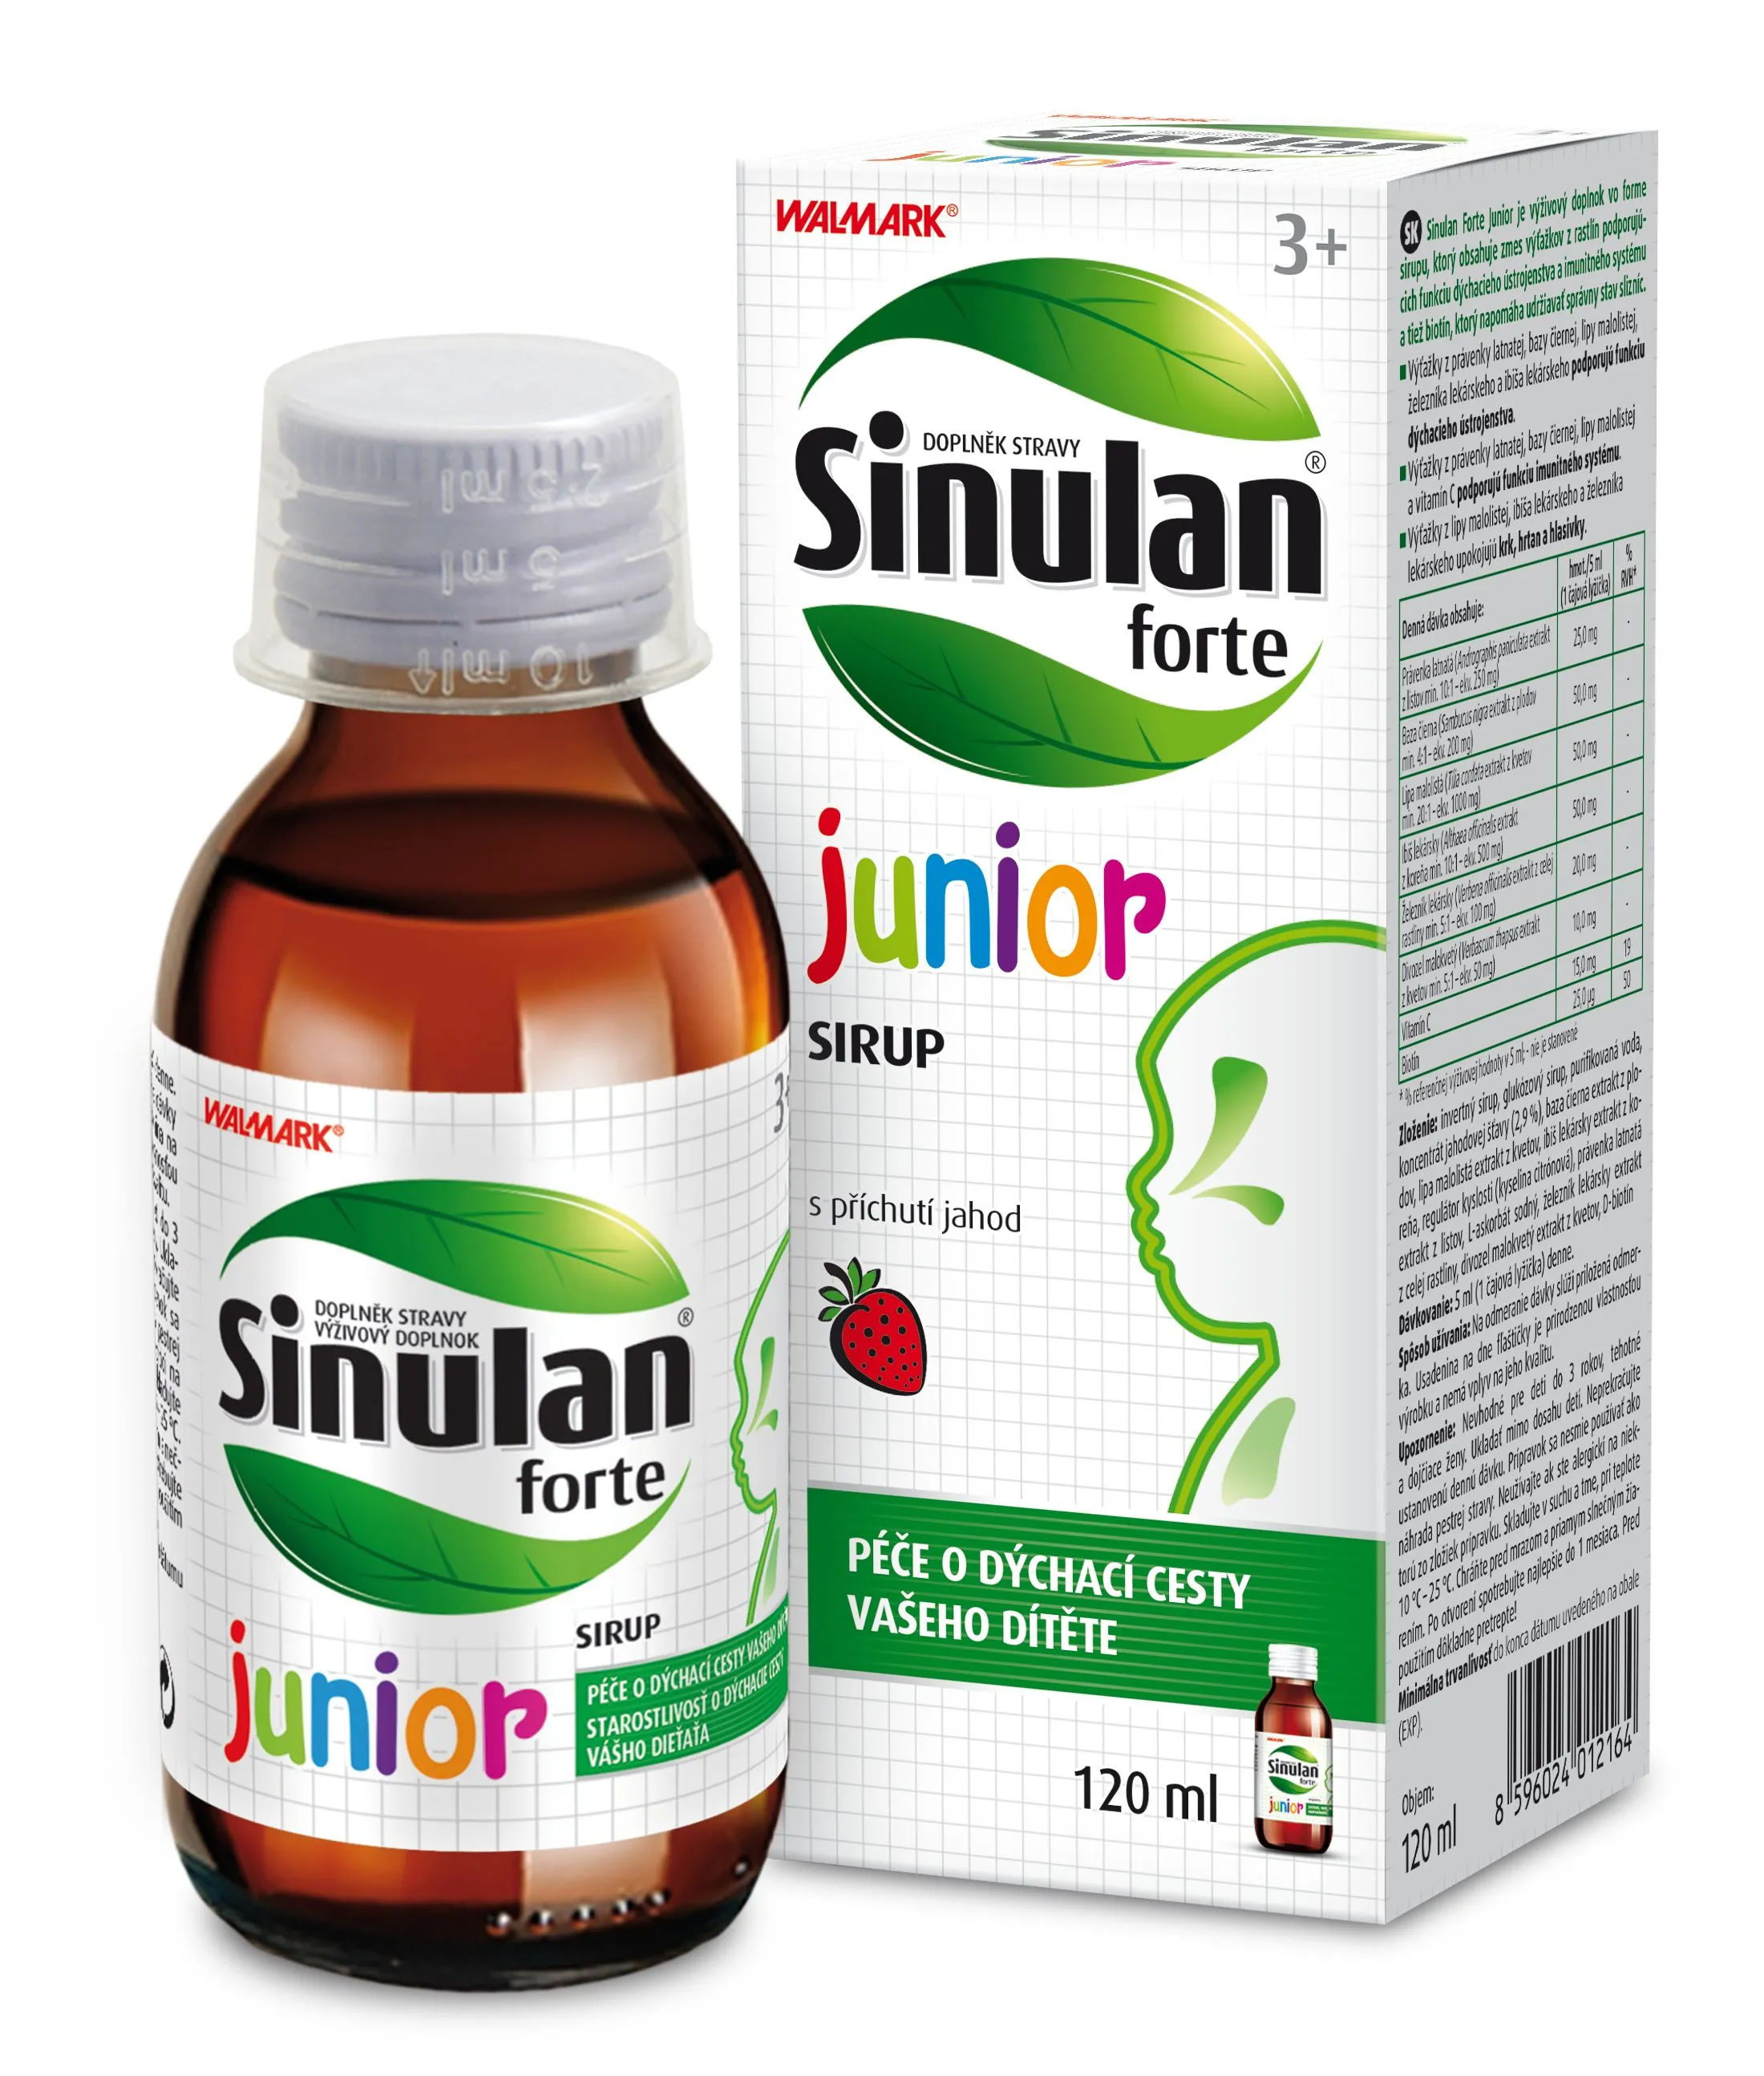 Walmark Sinulan forte Junior sirup 120 ml